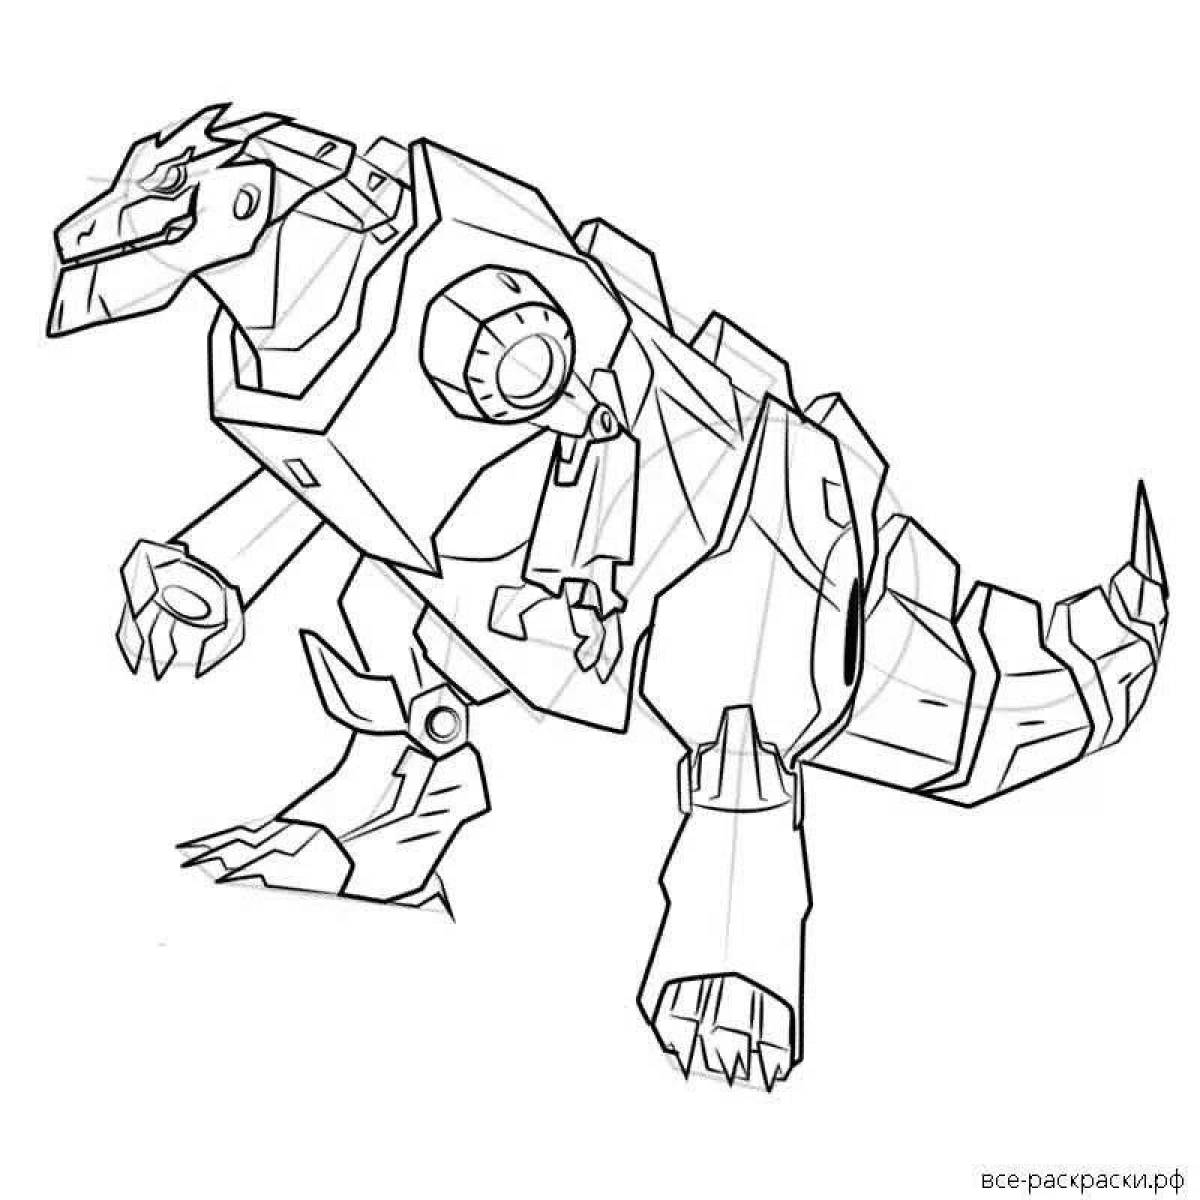 Vibrant robot dinosaur coloring page